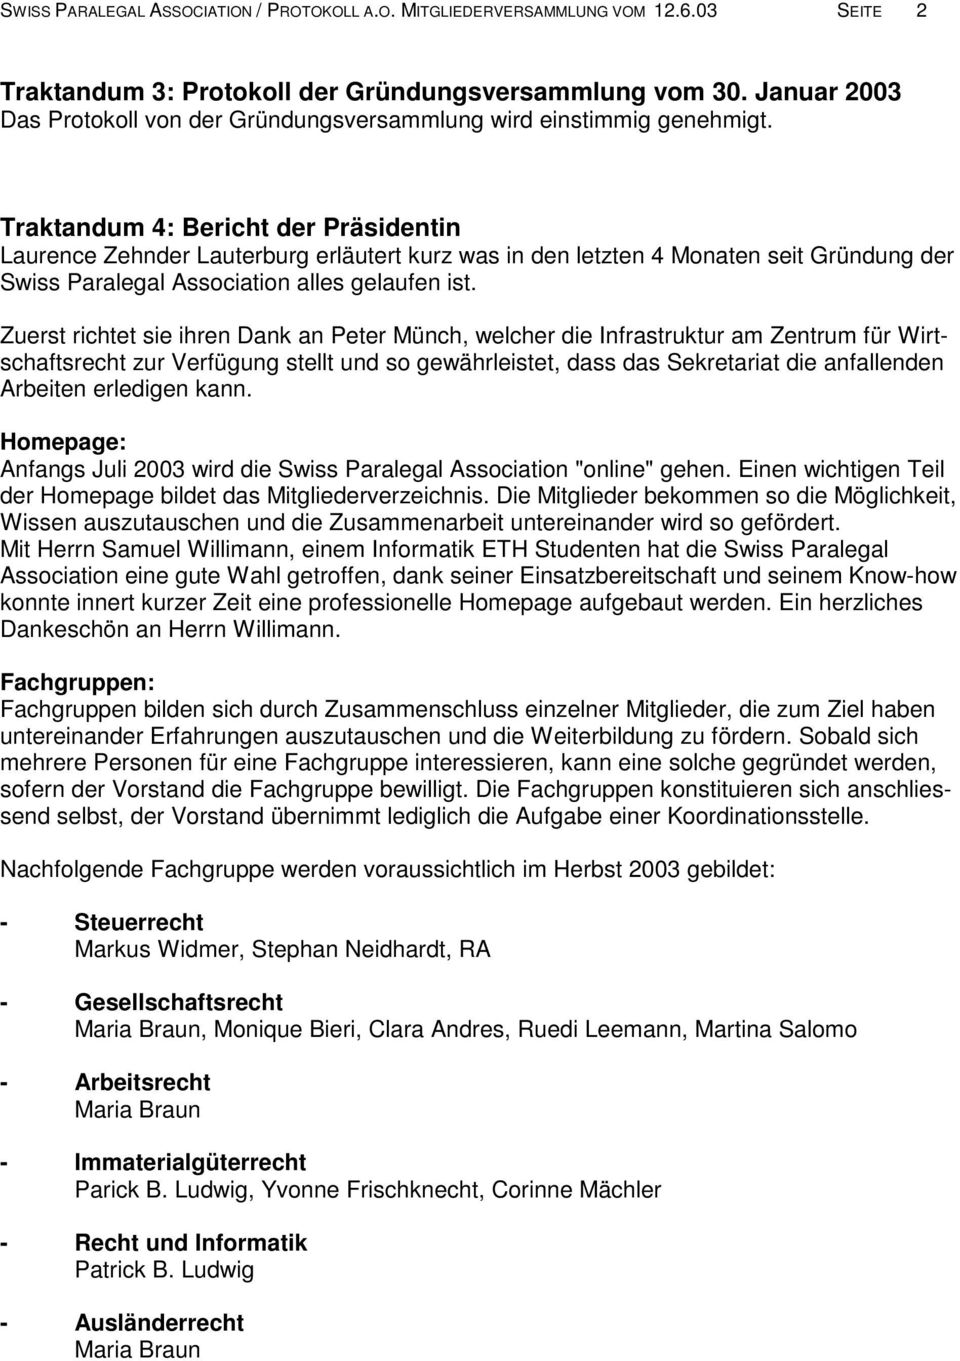 Traktandum 4: Bericht der Präsidentin Laurence Zehnder Lauterburg erläutert kurz was in den letzten 4 Monaten seit Gründung der Swiss Paralegal Association alles gelaufen ist.